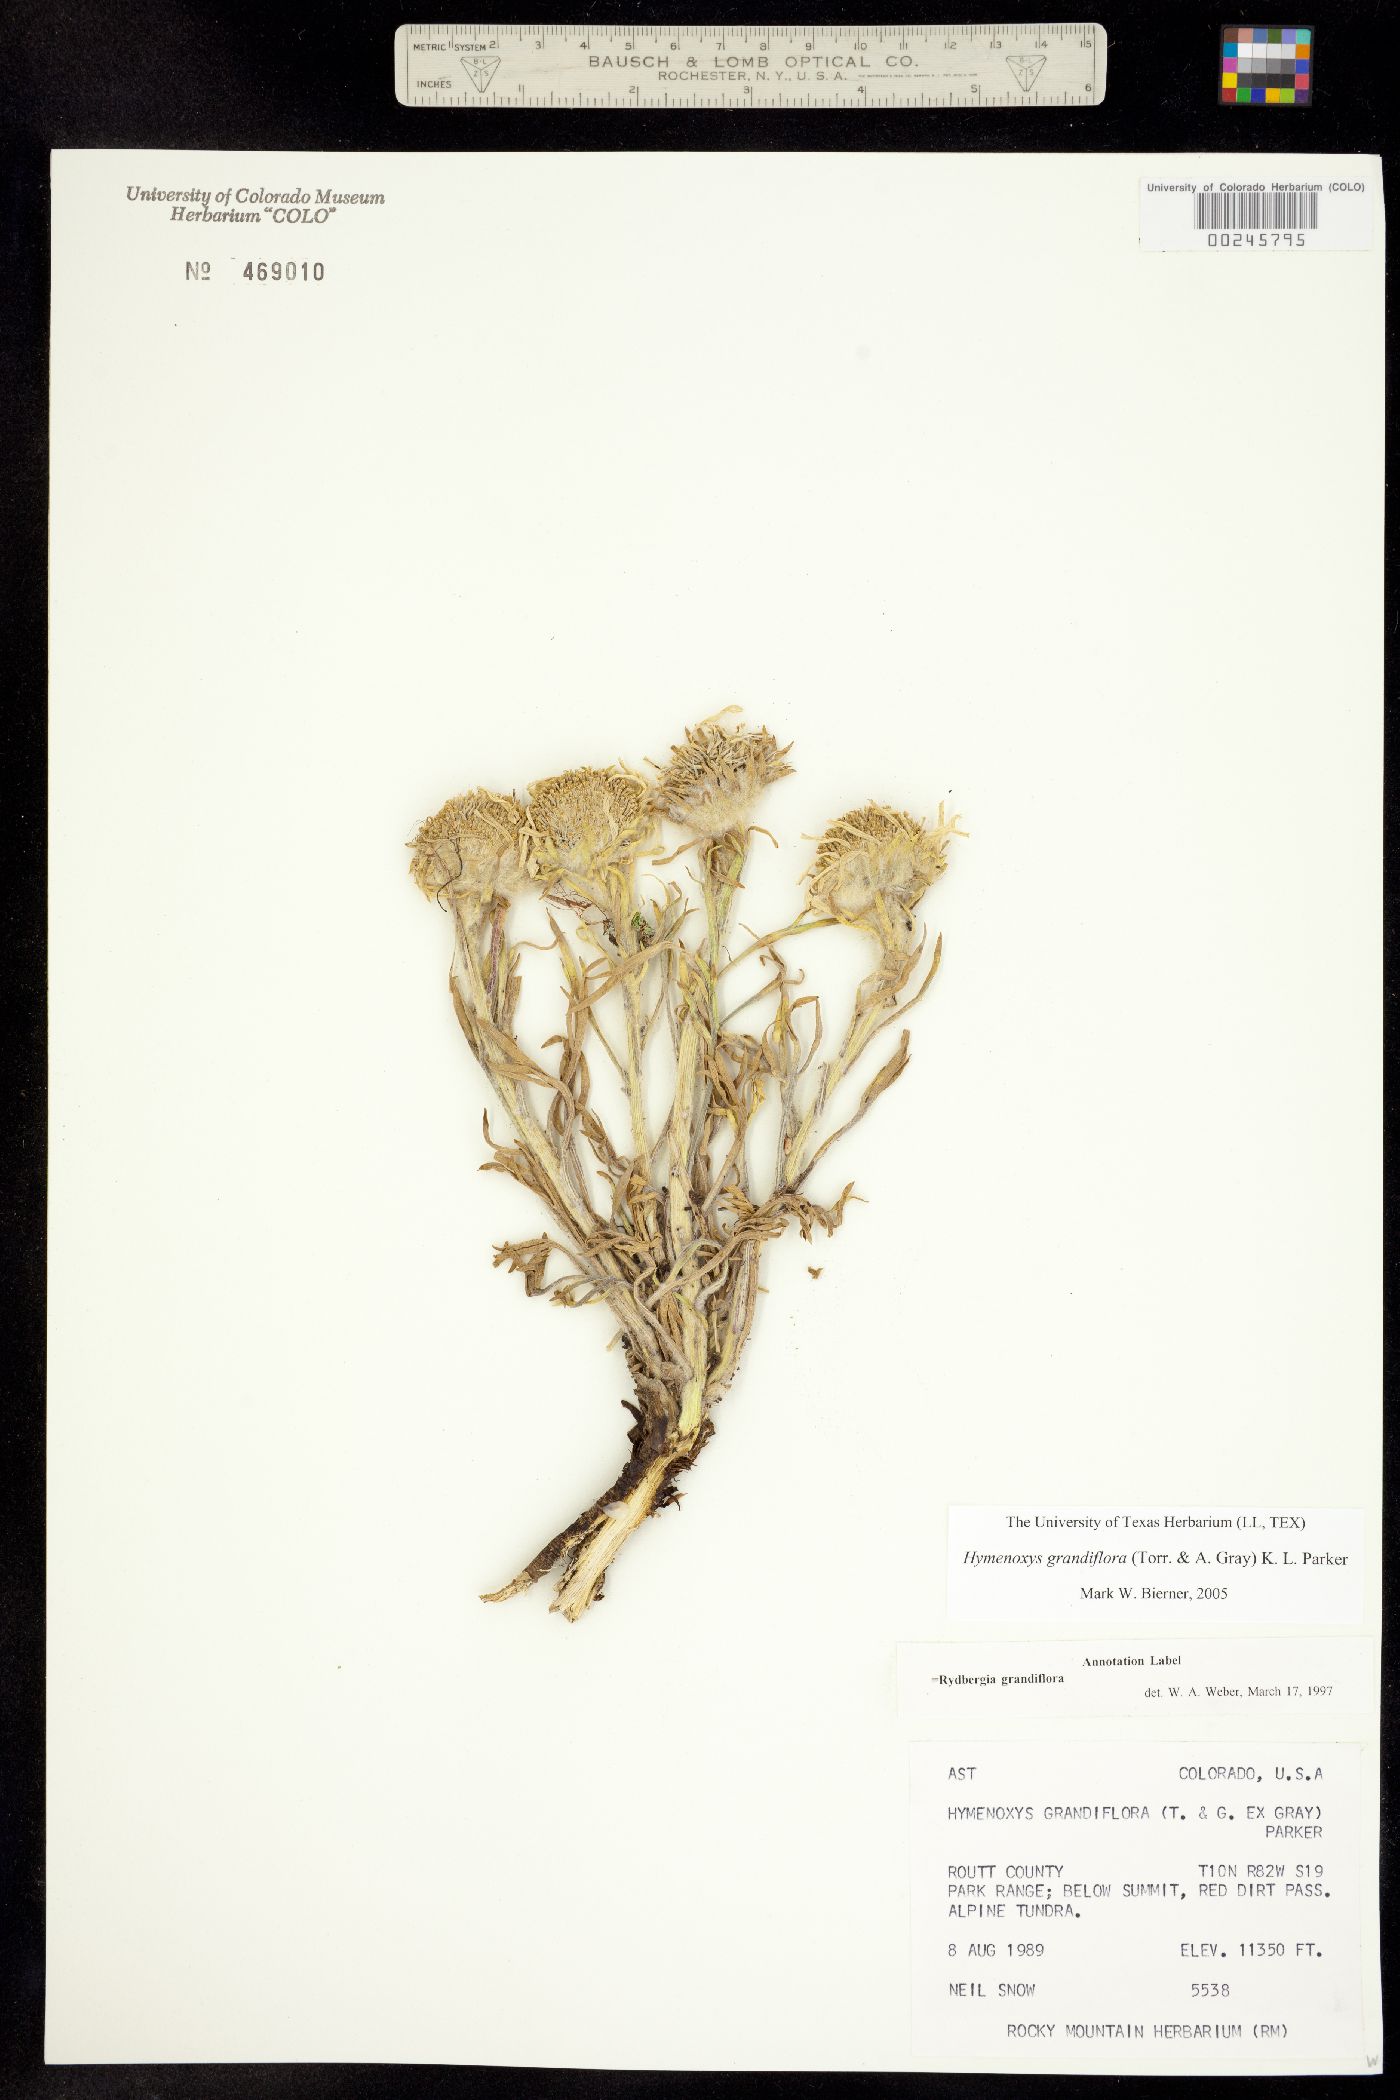 Rydbergia grandiflora image